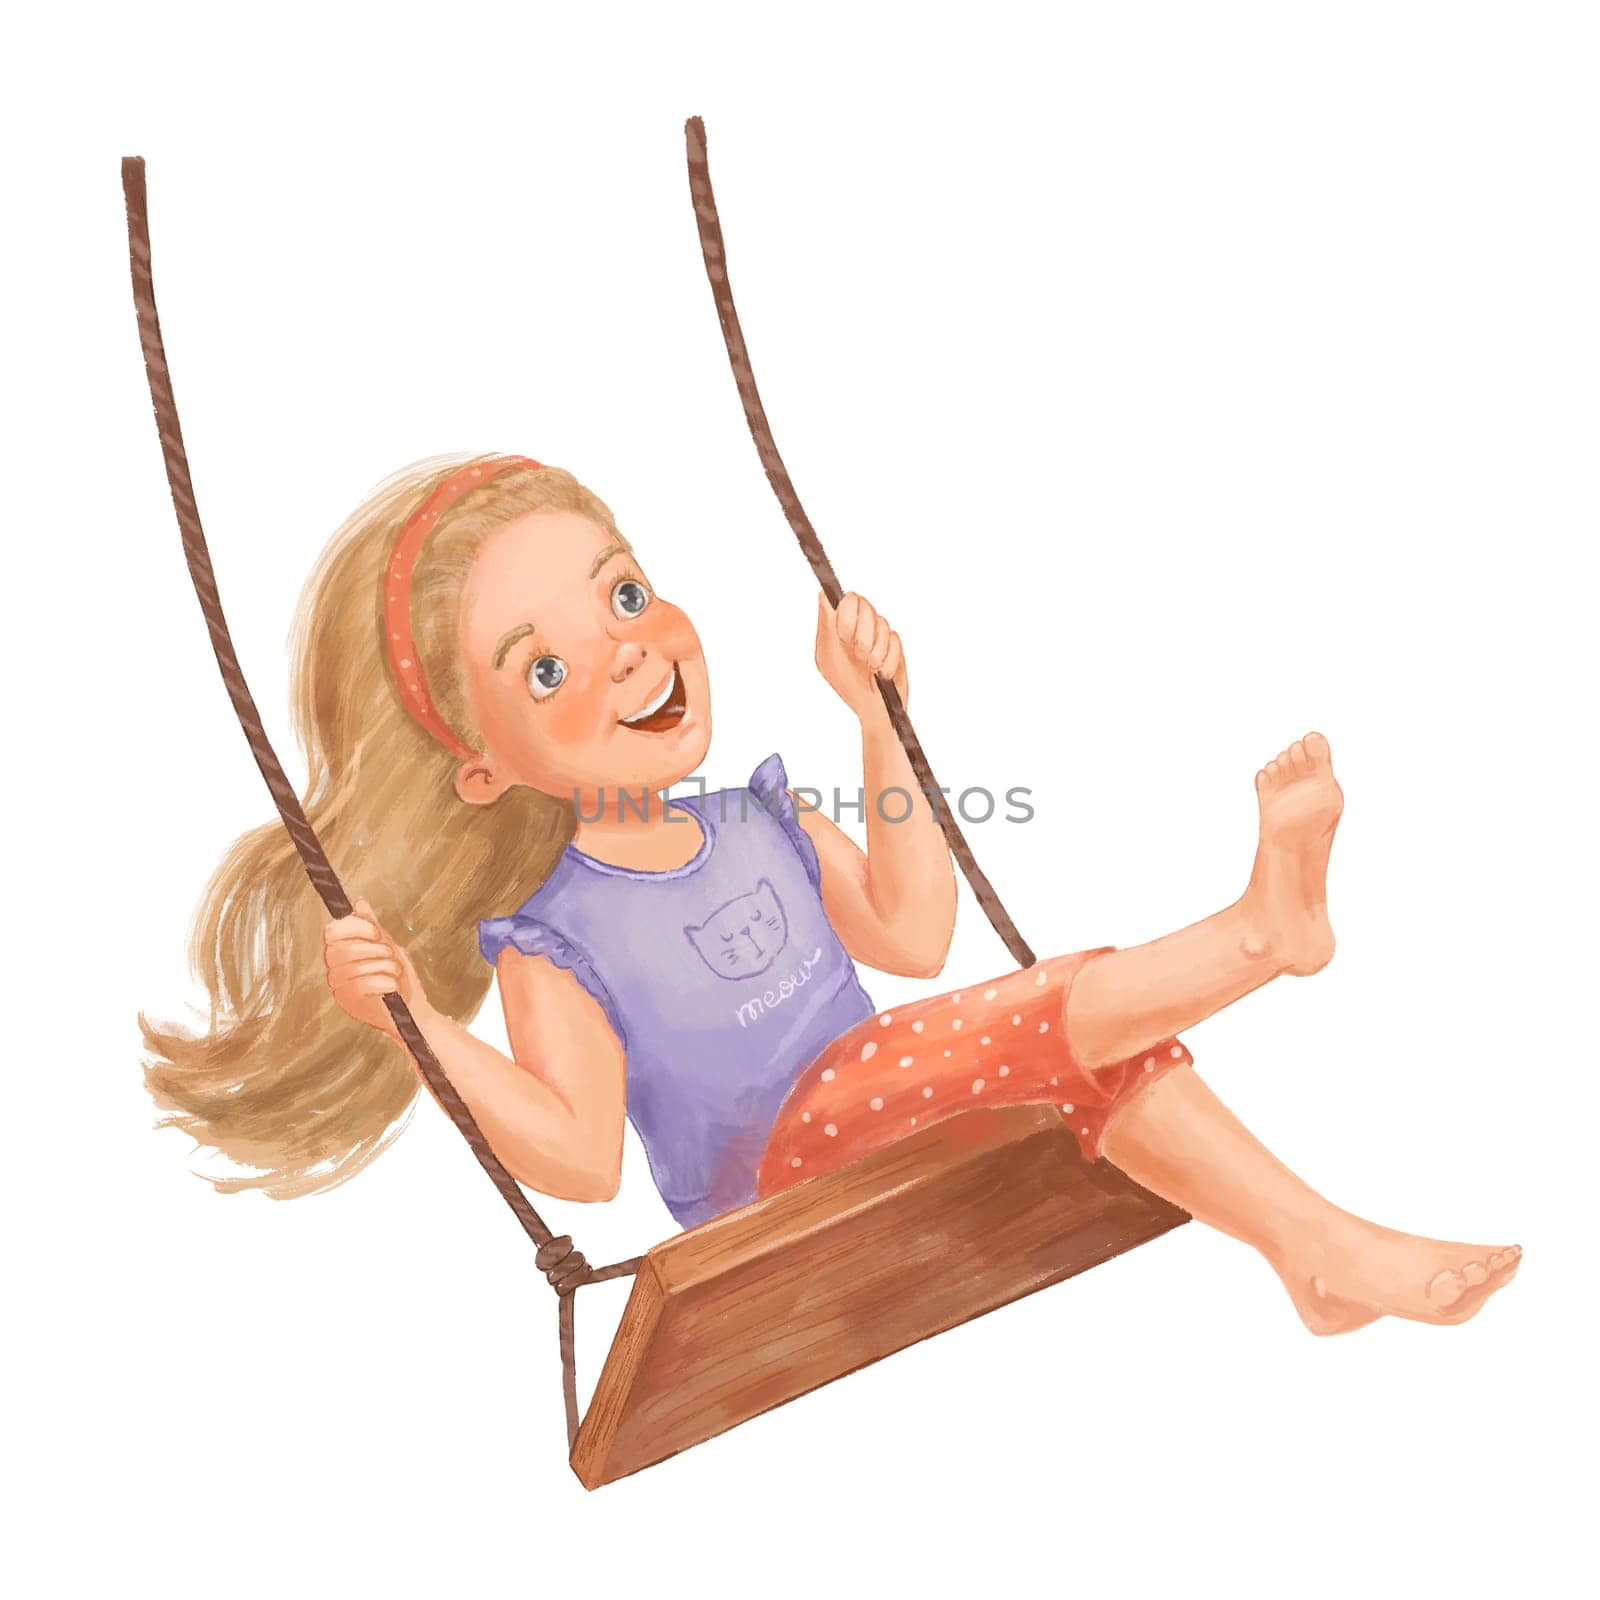 Cute long haired girl sitting on rope swing. Childish illustration isolated on white by ElenaPlatova